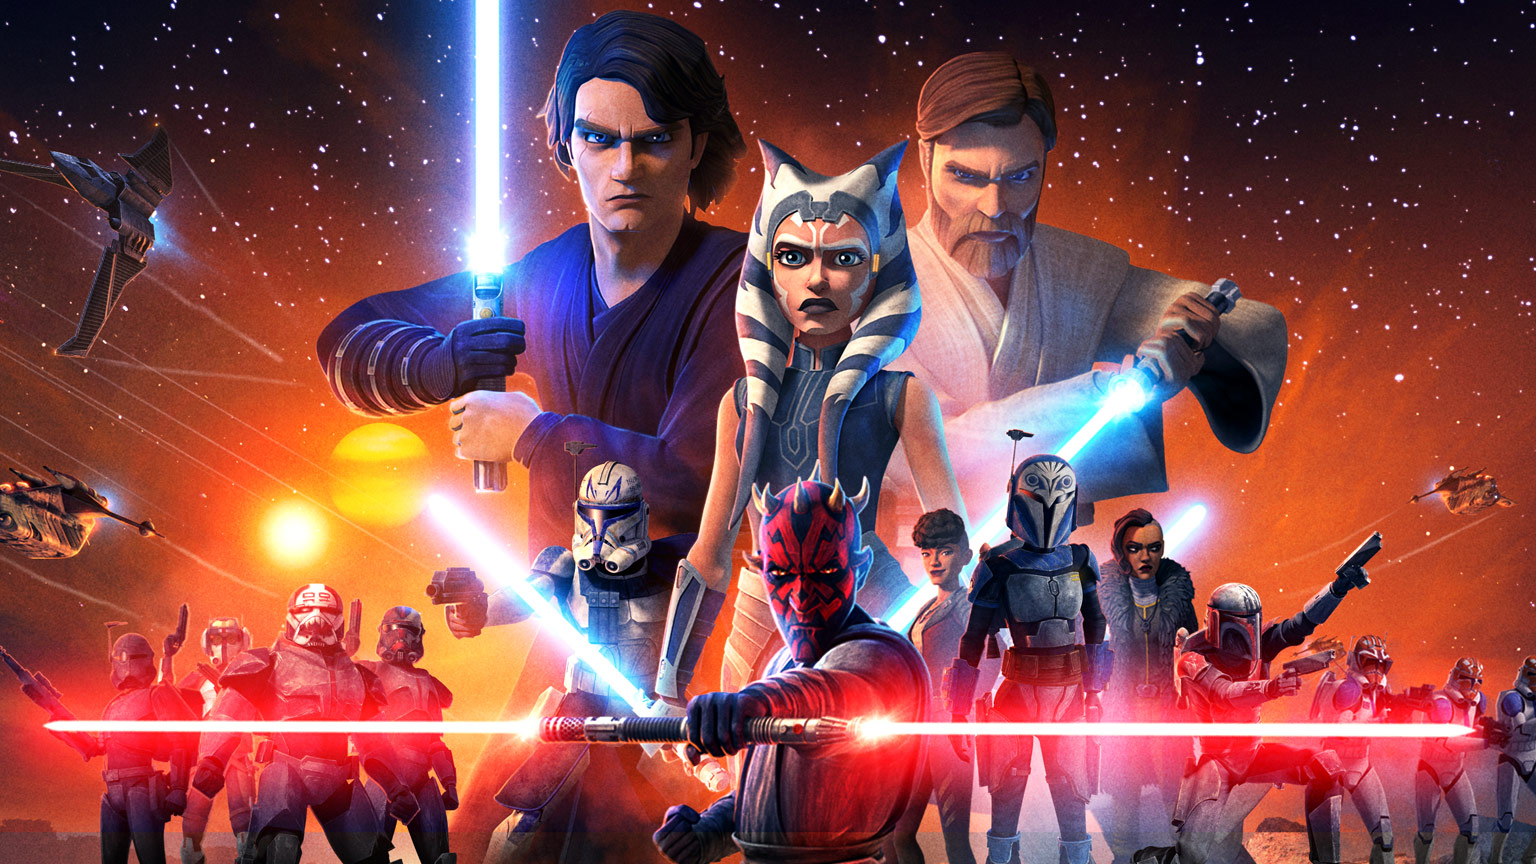 The Clone Wars spin-off Obi-Wan Kenobi